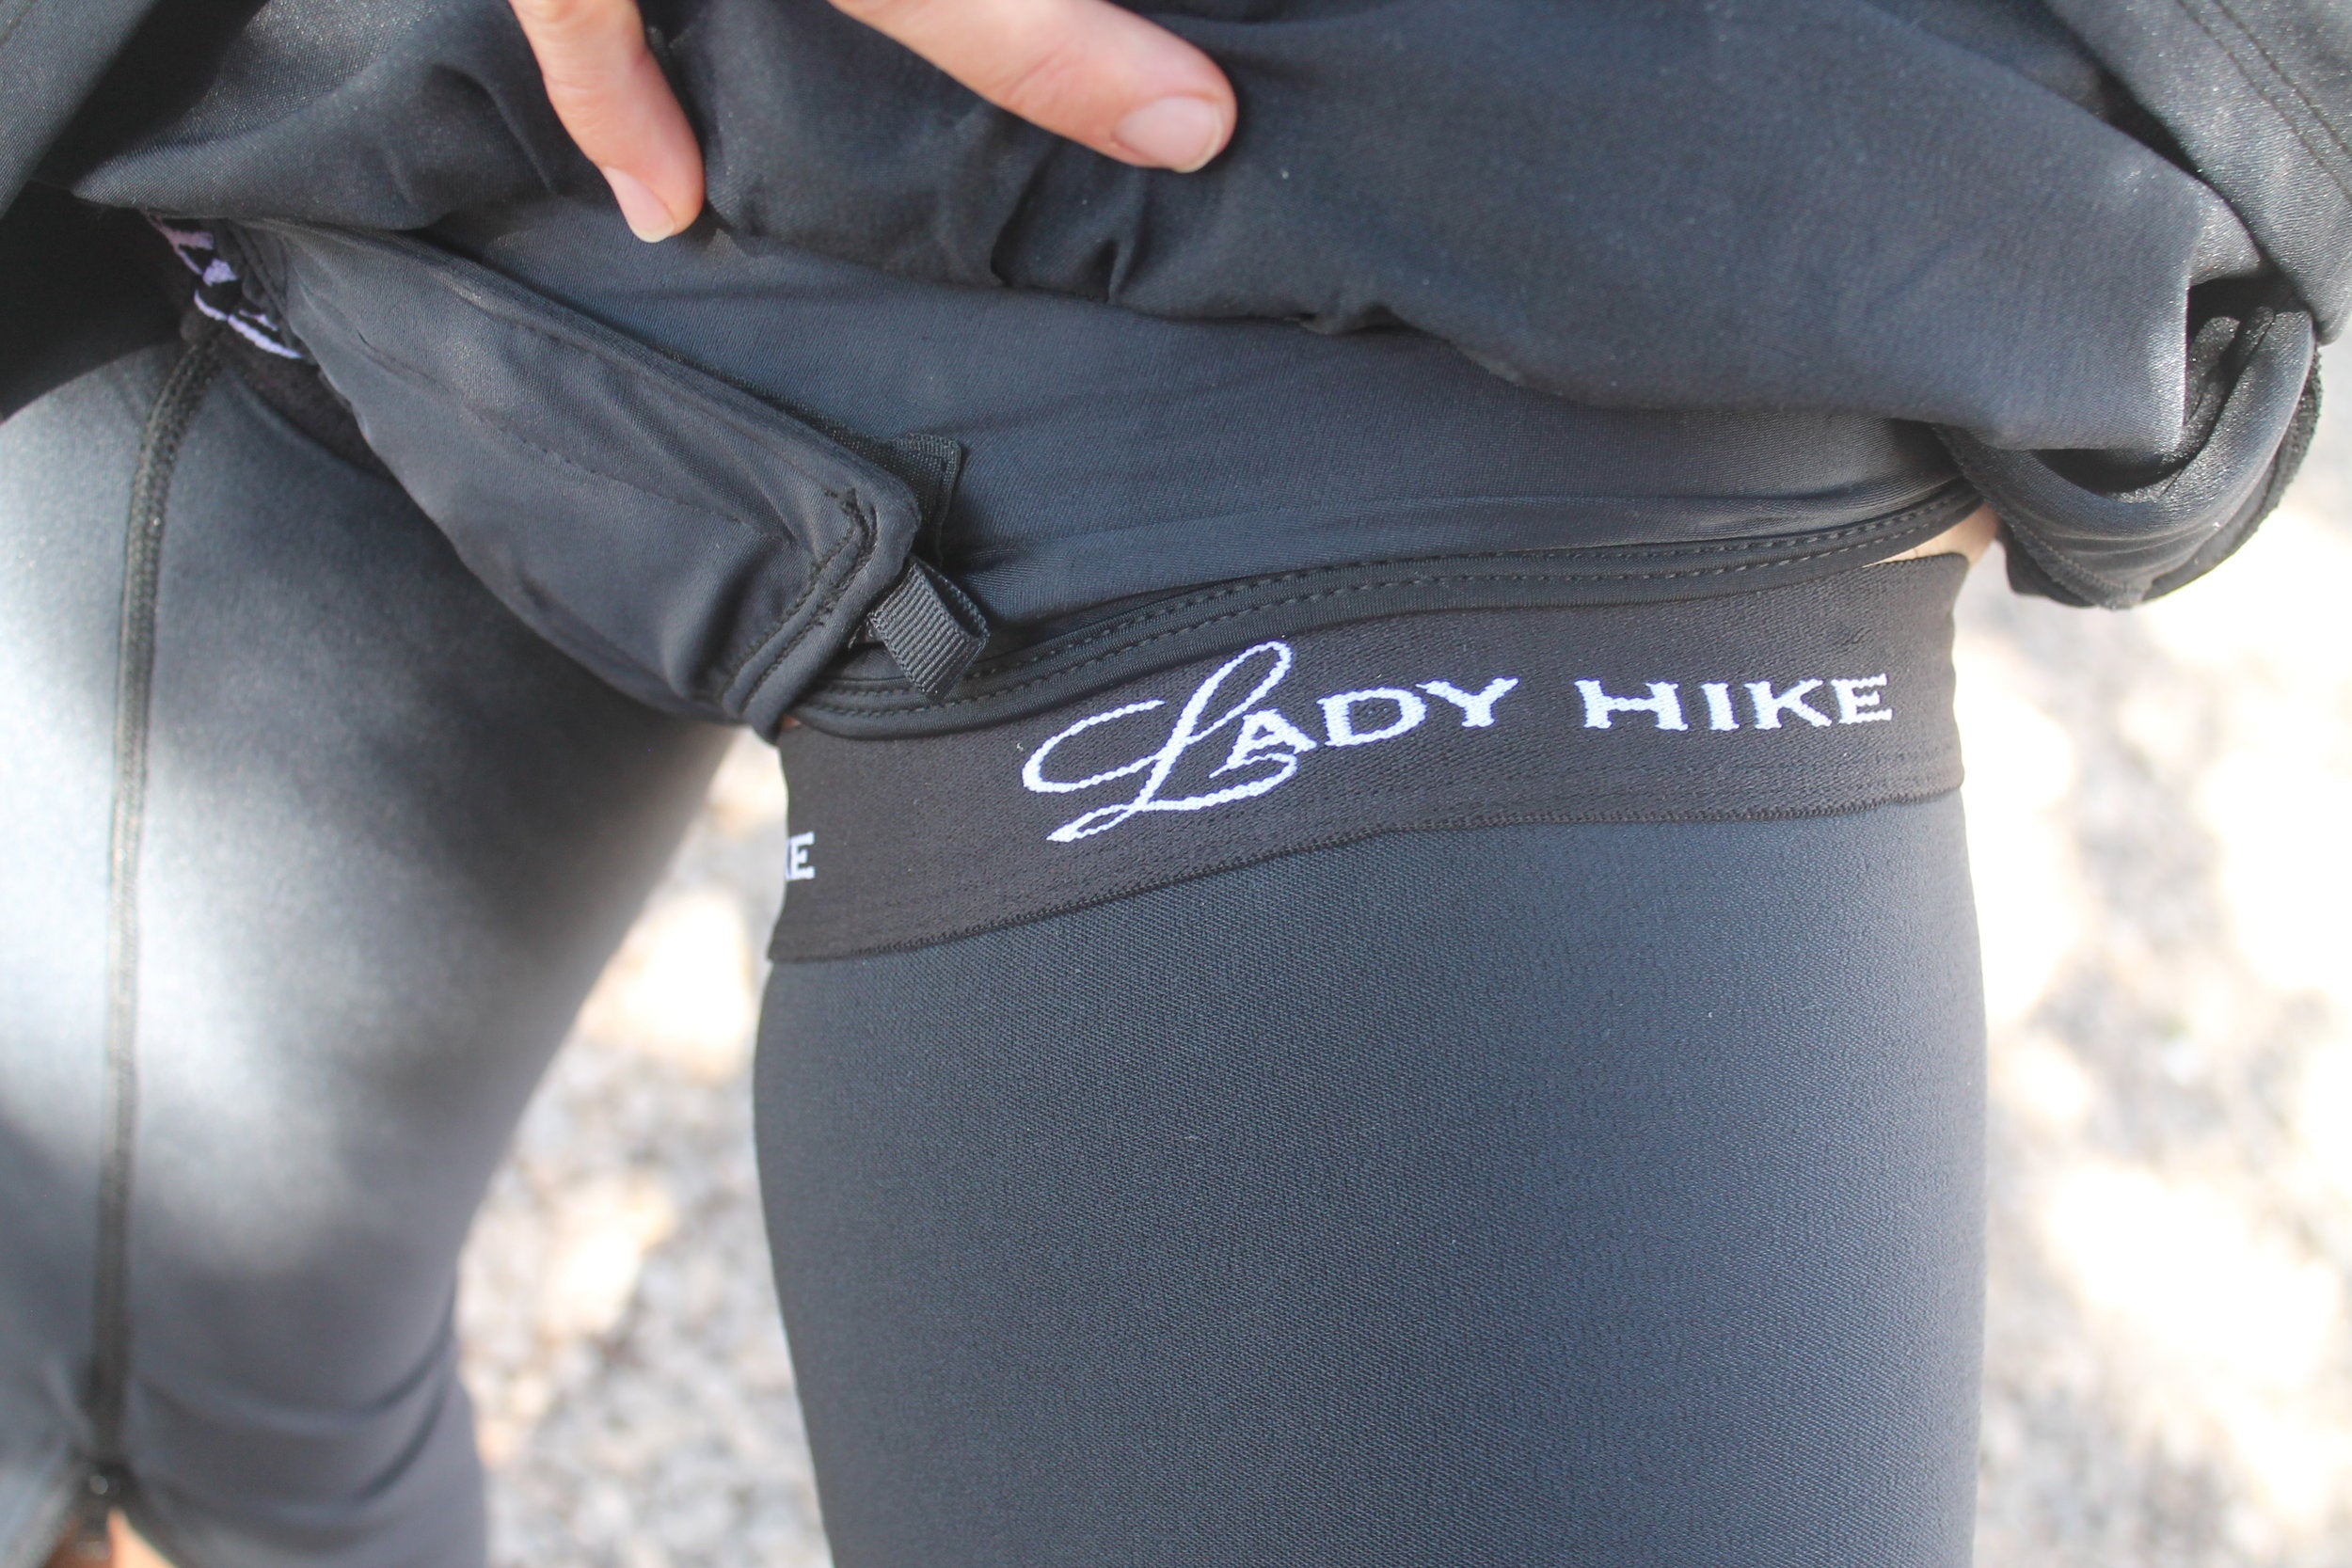 Leg Ins (limited edition) – Lady Hike